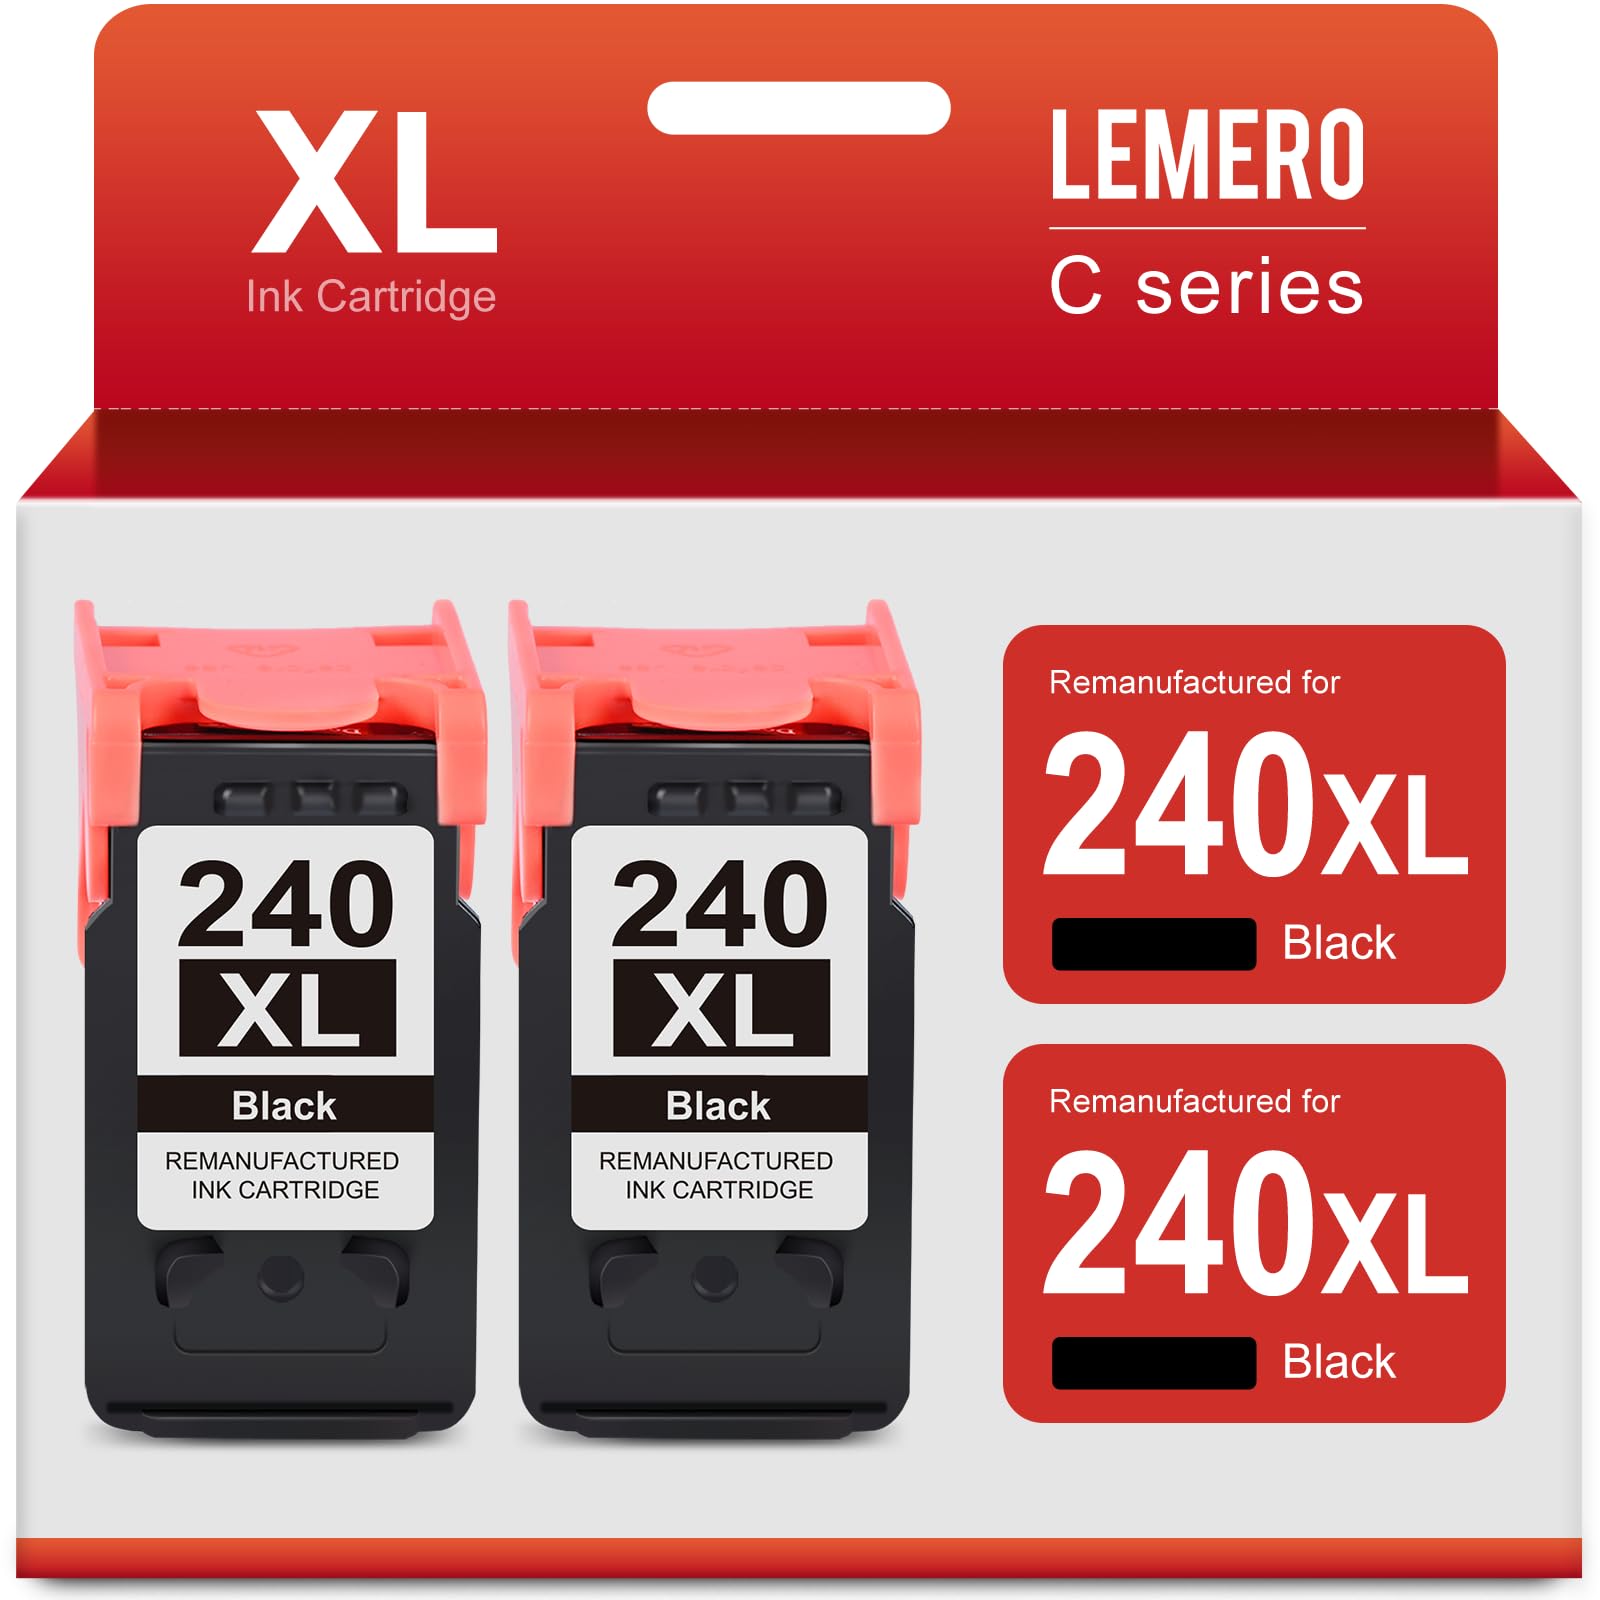 LEMERO C Series Ink Cartridge 240XL Black Ink Cartridges